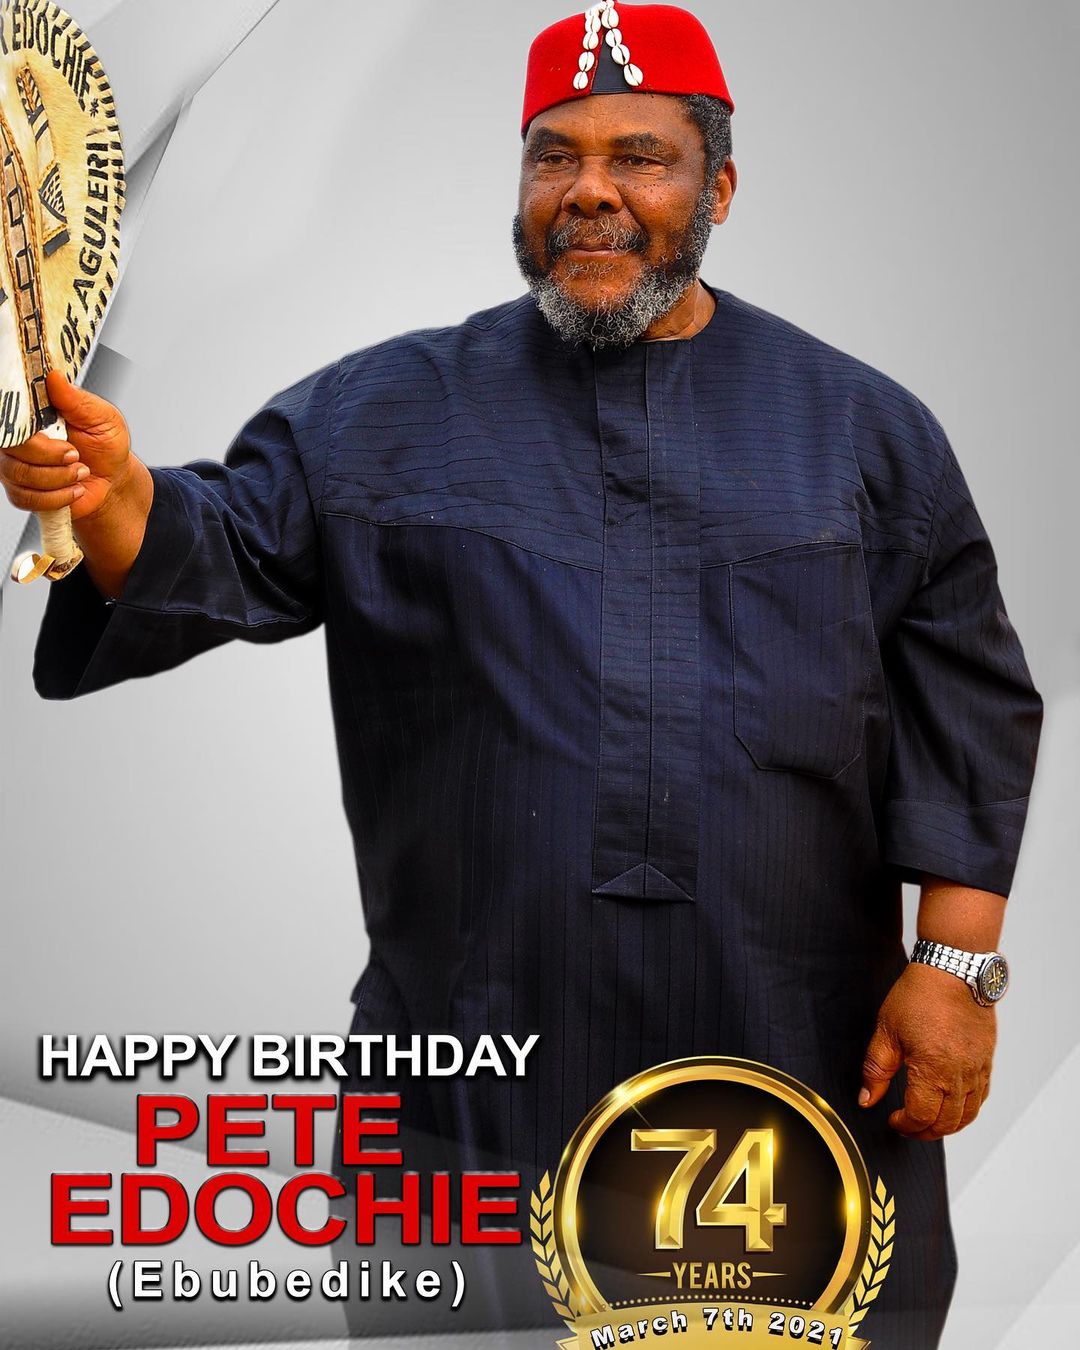 Peteedochieat74 - Pete Edochie Celebrates His 74th Birthday Today (photos) 13230549_peteedochie202103071_jpegd2d80a354fe91323fe551da2b6f66c94